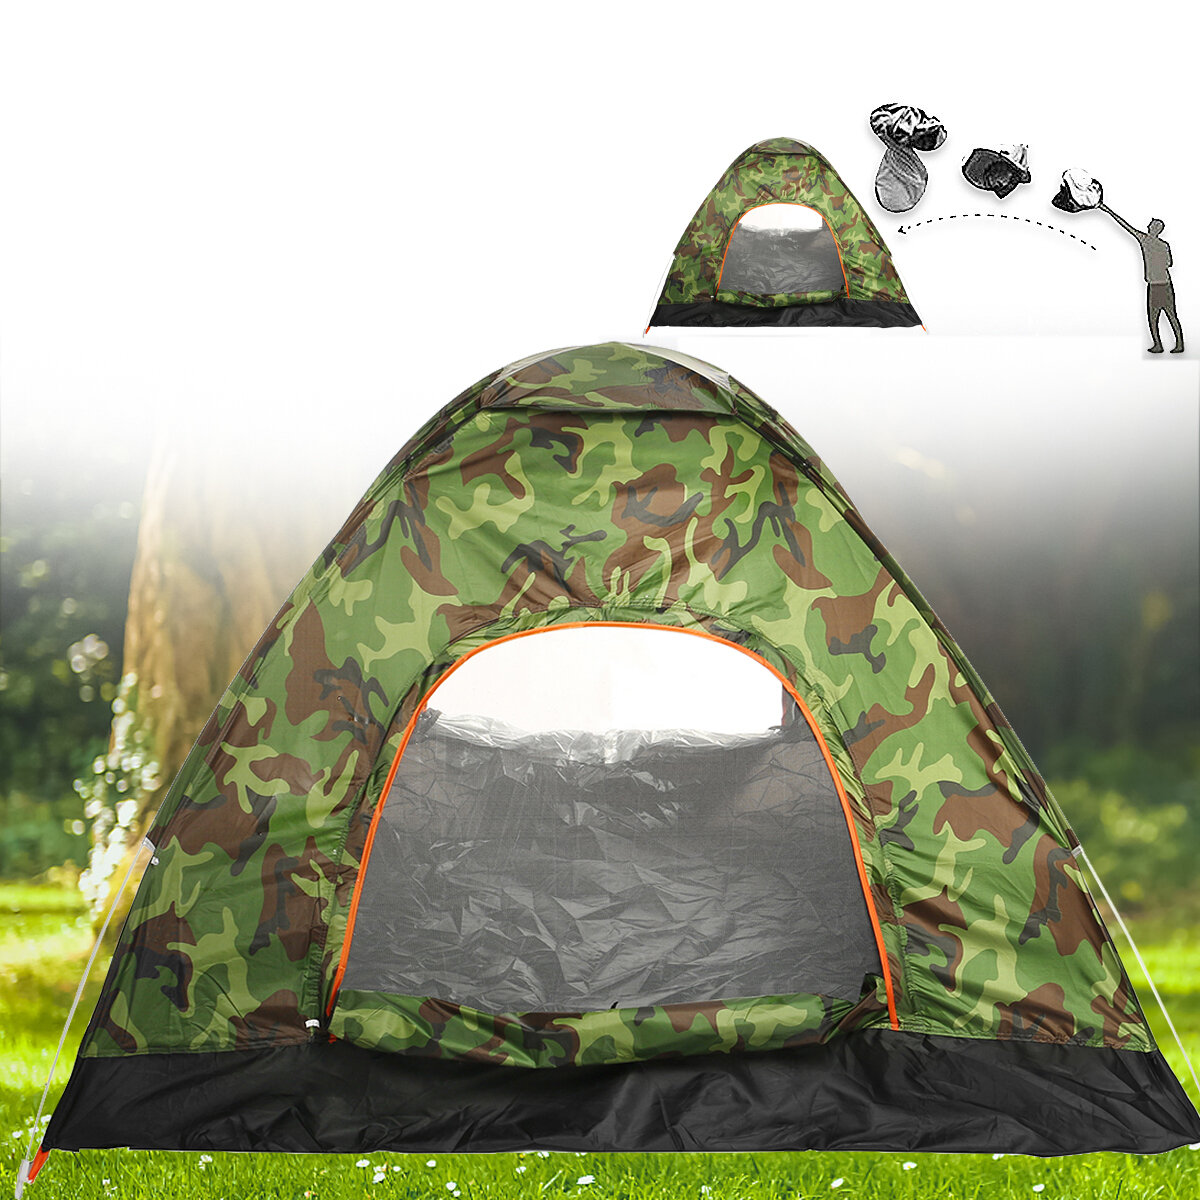 IPRee® 1-4人用自動オープンキャンプテント、防水、防風、UVカット日除け、超軽量トラベルハイキング。